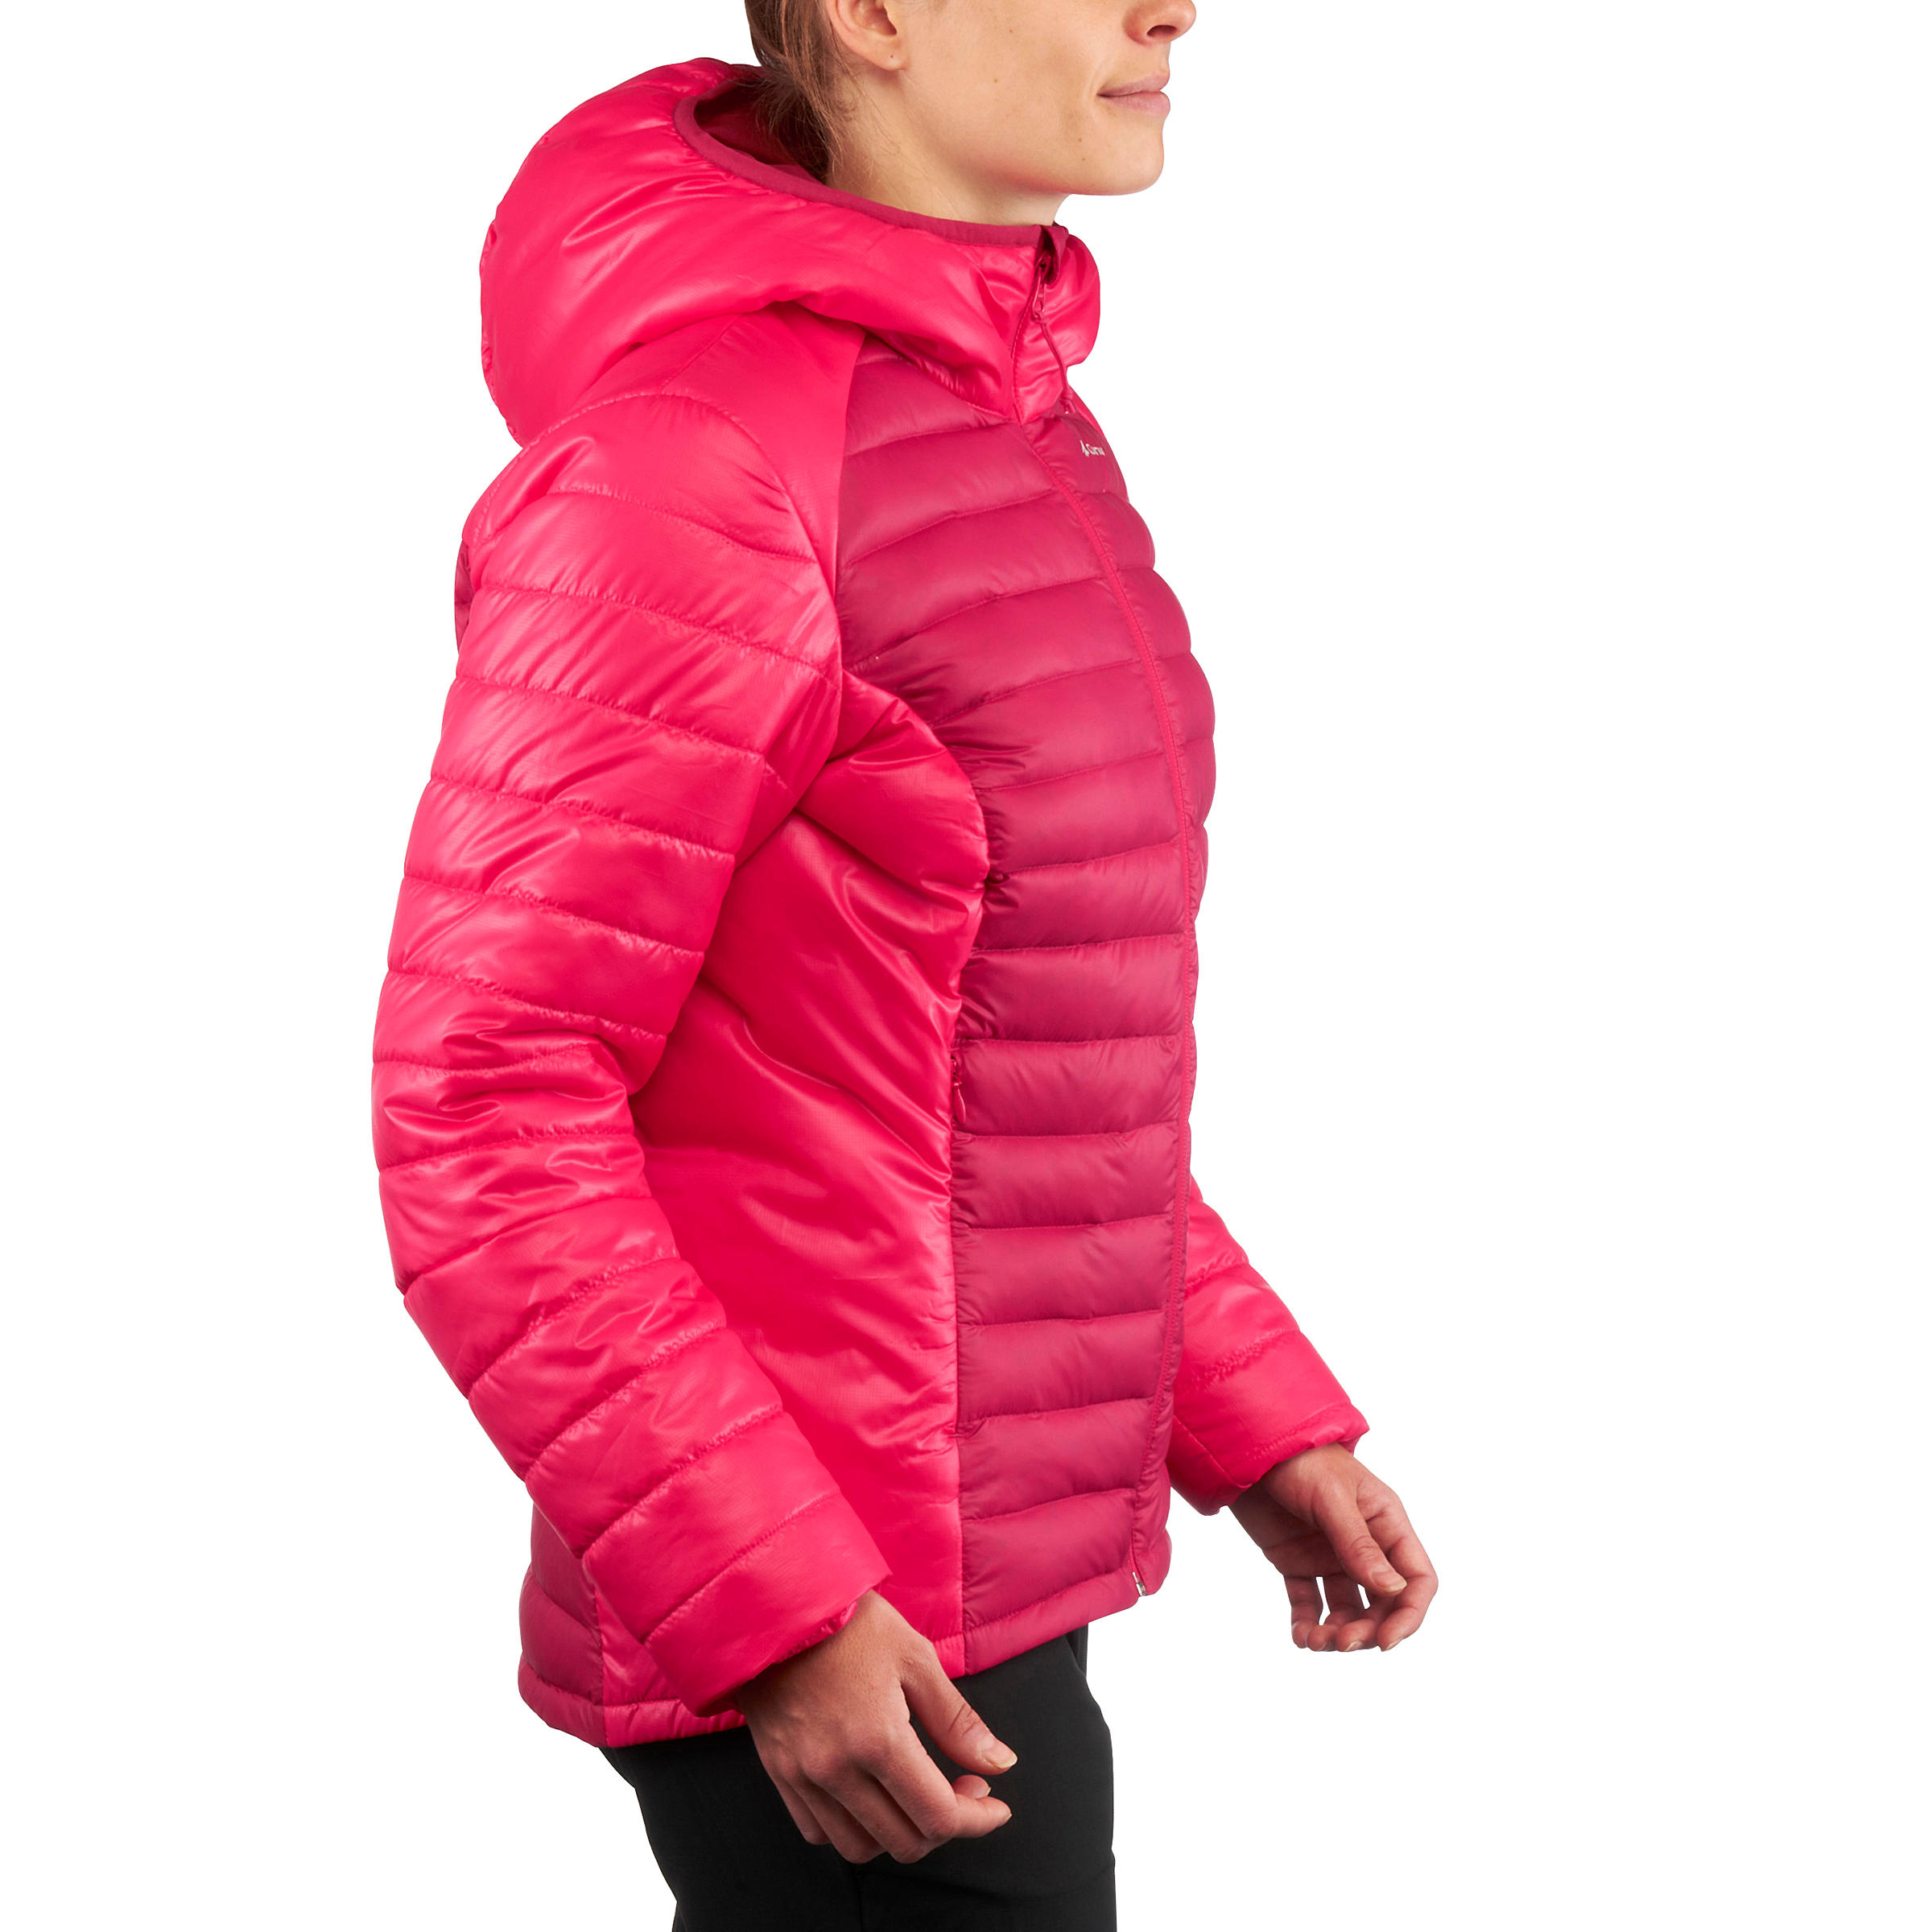 X-Light 1 Woman's Padded Hiking Jacket - Pink 15/17